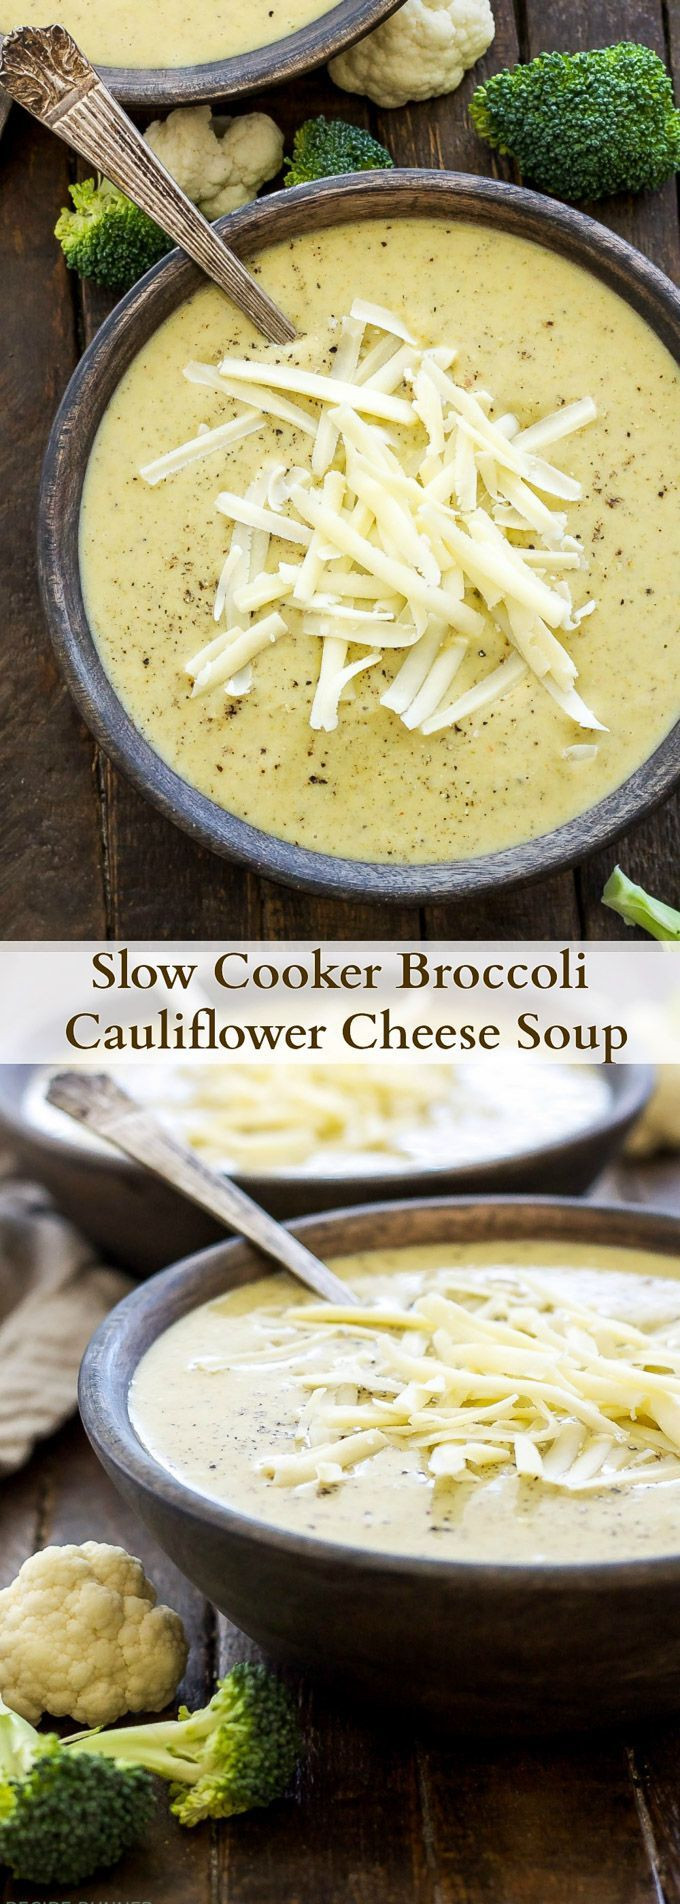 Slow Cooker Cauliflower
 Slow Cooker Broccoli Cauliflower Cheese Soup